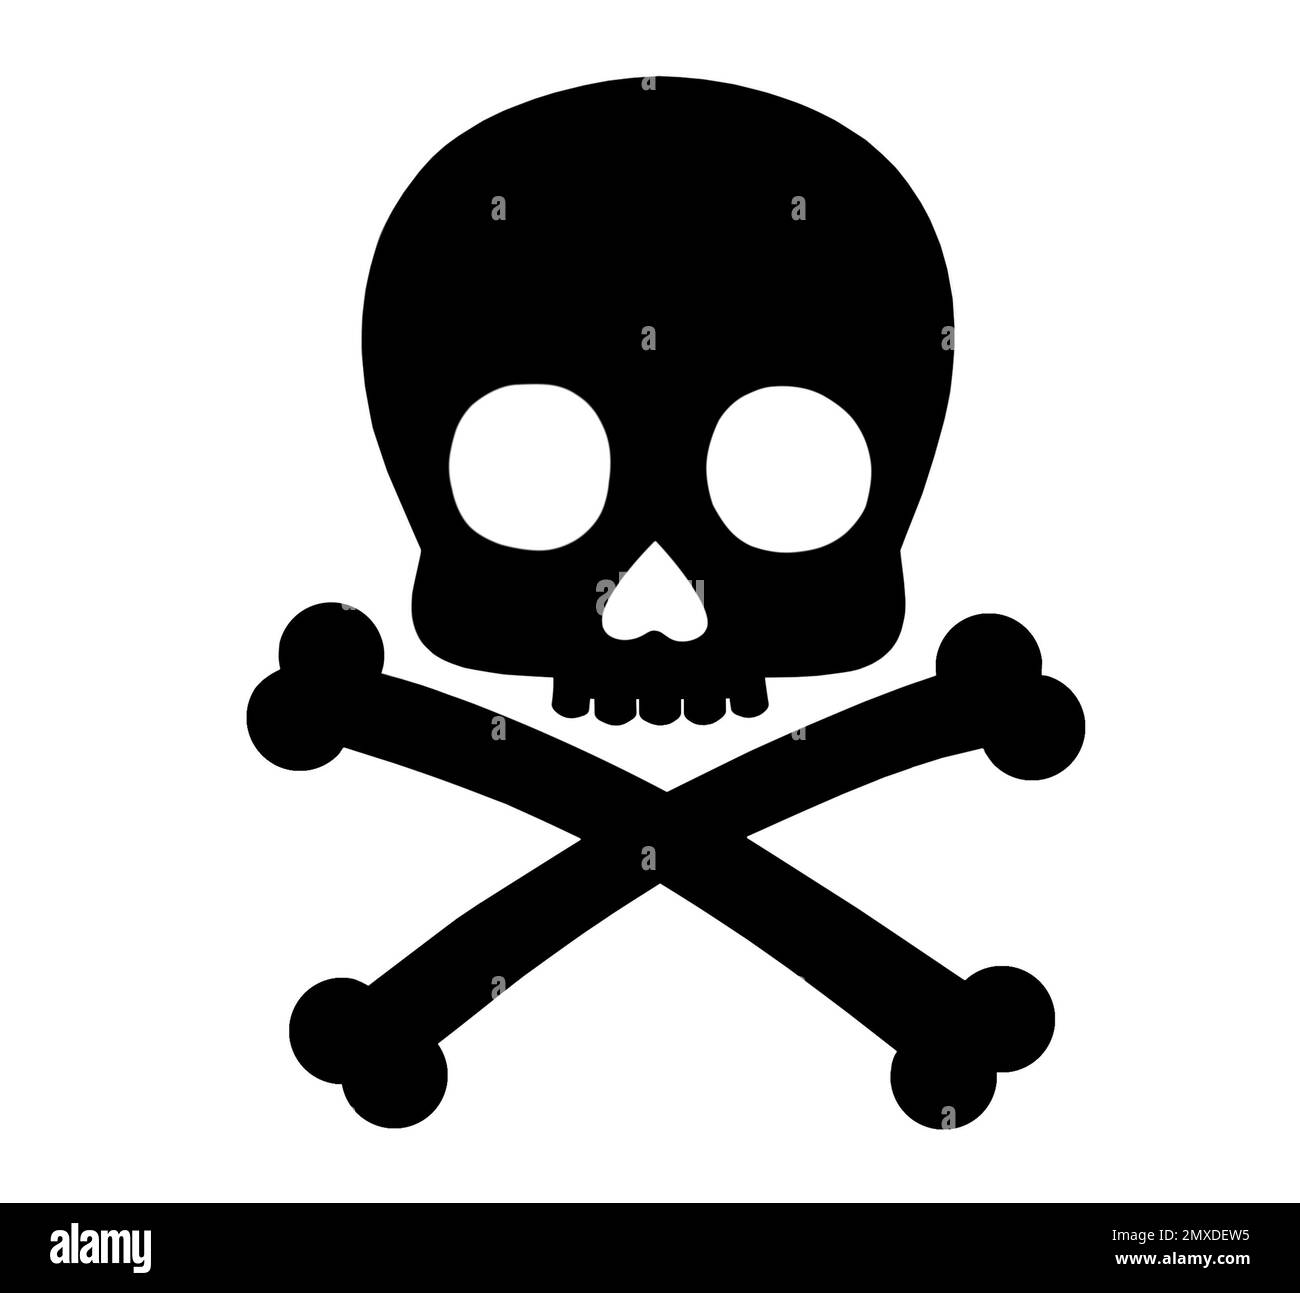 Skull and crossbones illustration on white background as warning symbol Stock Photo